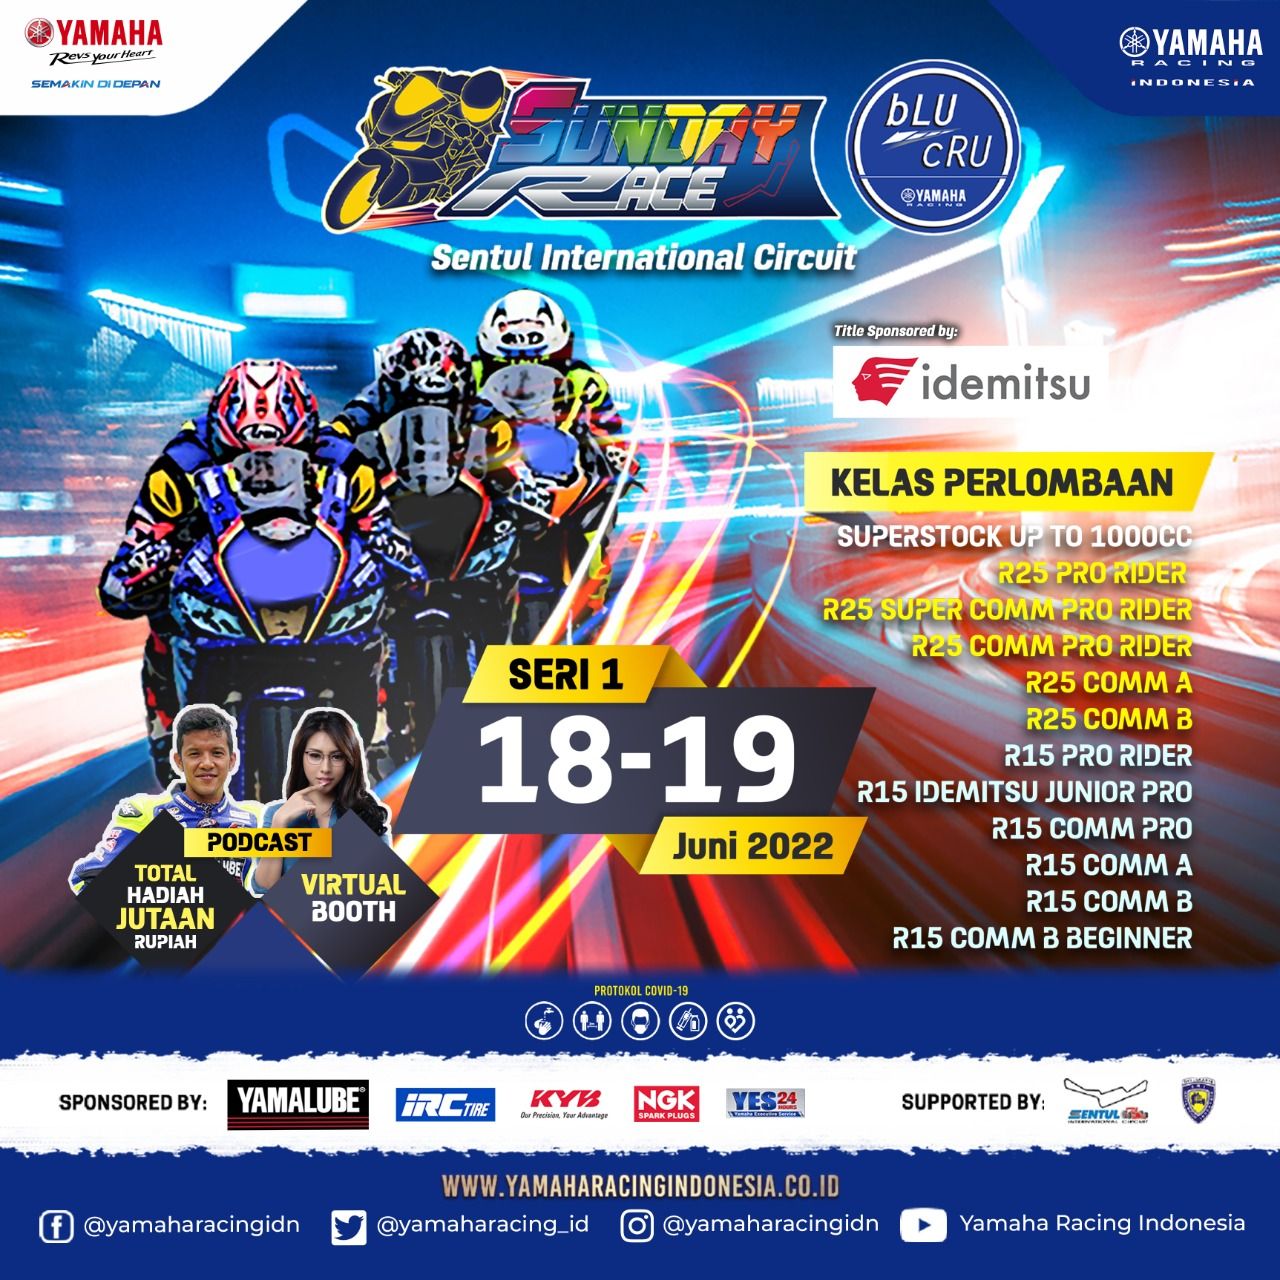 Idemitsu bLU cRU Yamaha Sunday Race 2022 Siap Dimulai Seri 1 18-19 Juni di Sentul, One Make Race Pertama